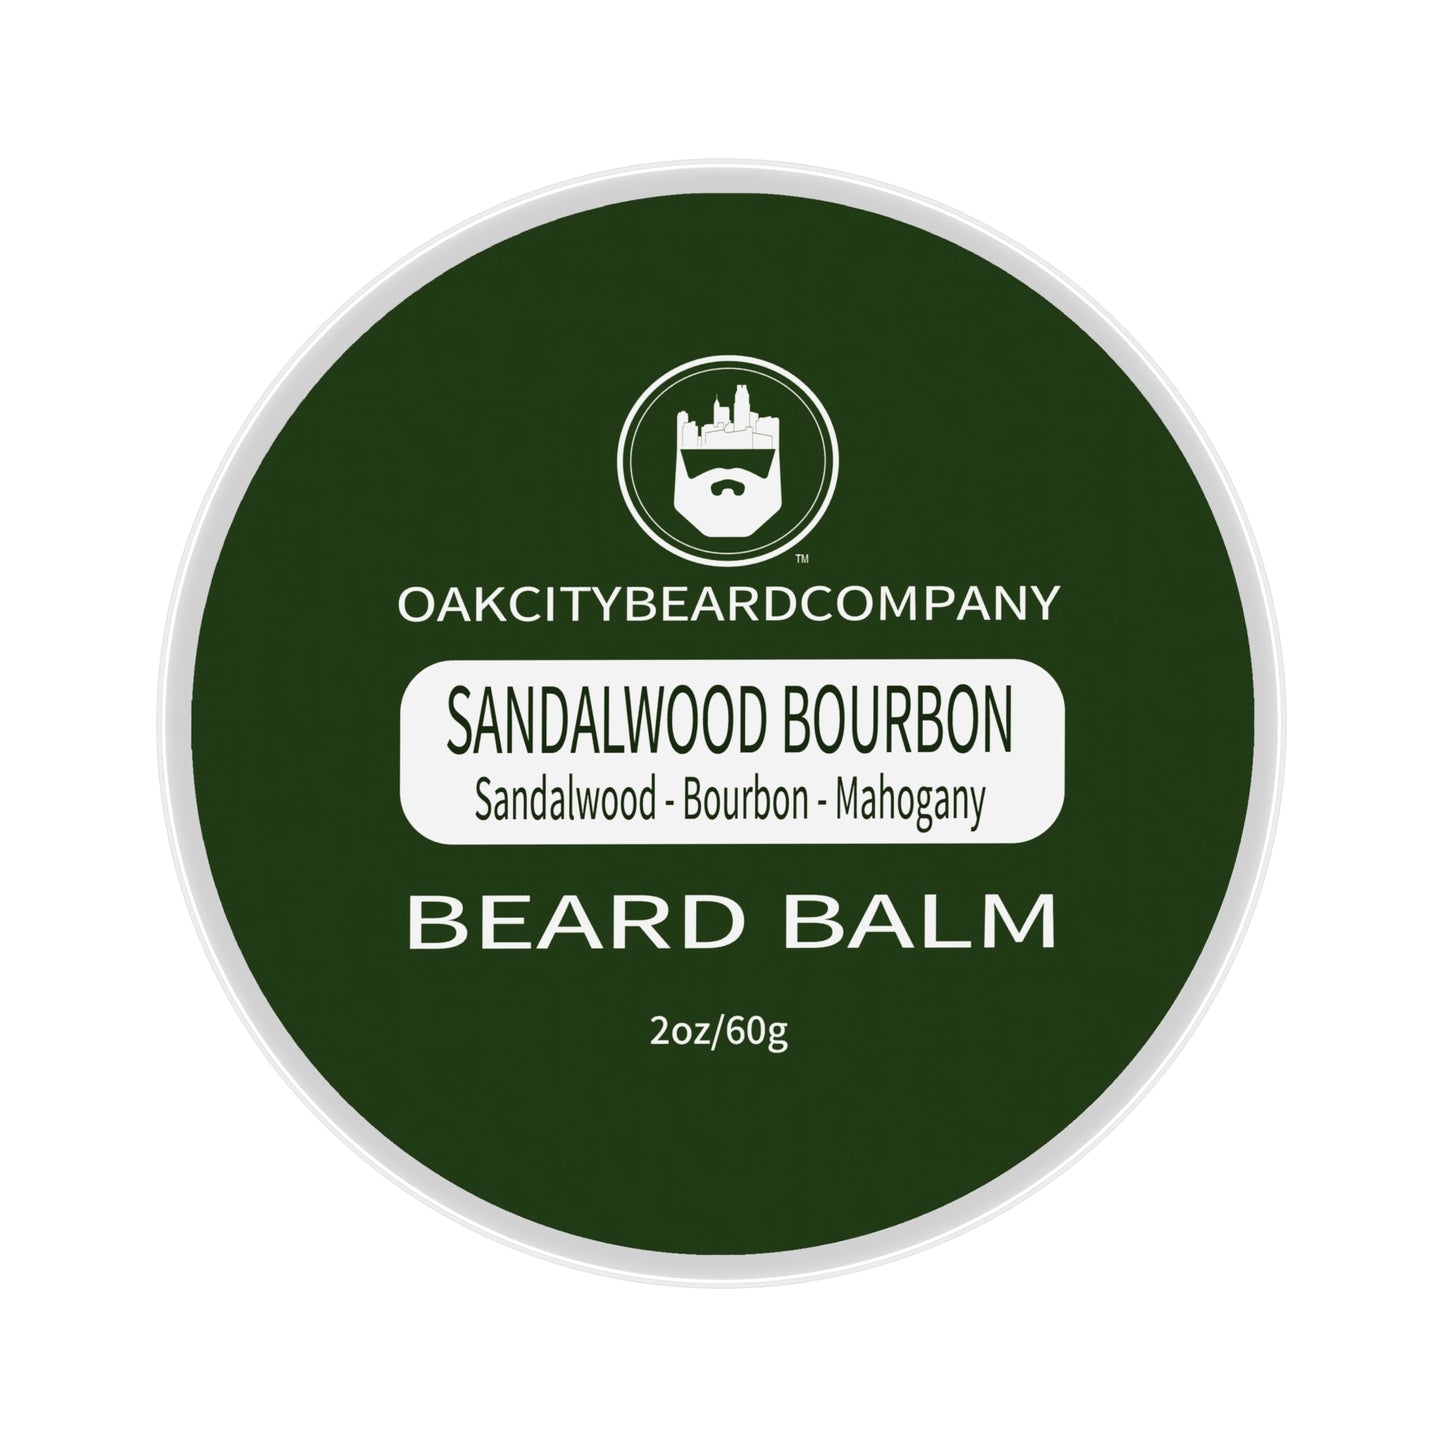 Sandalwood Bourbon (Beard Balm) by Oak City Beard Company